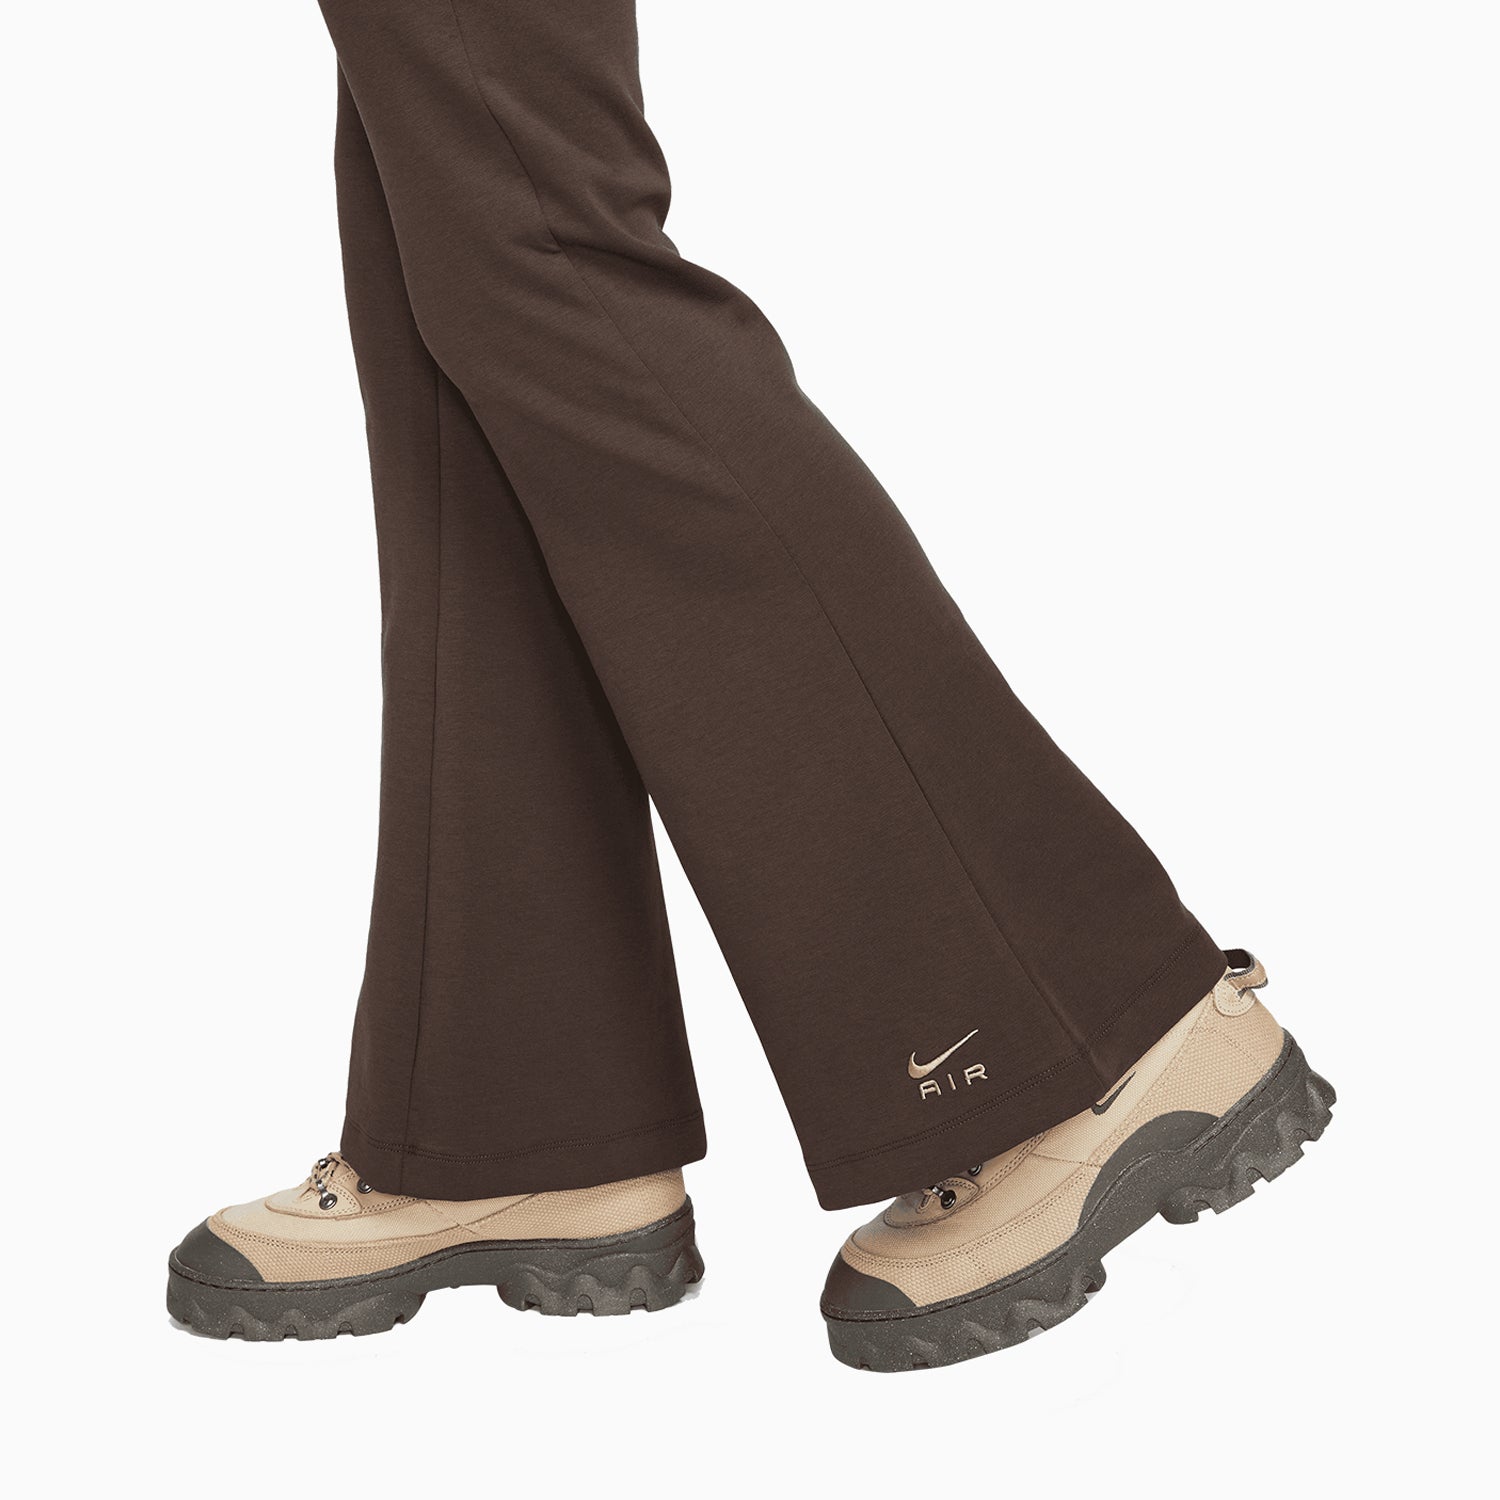 nike-womens-sportswear-air-high-waisted-flared-leggings-fb8070-237